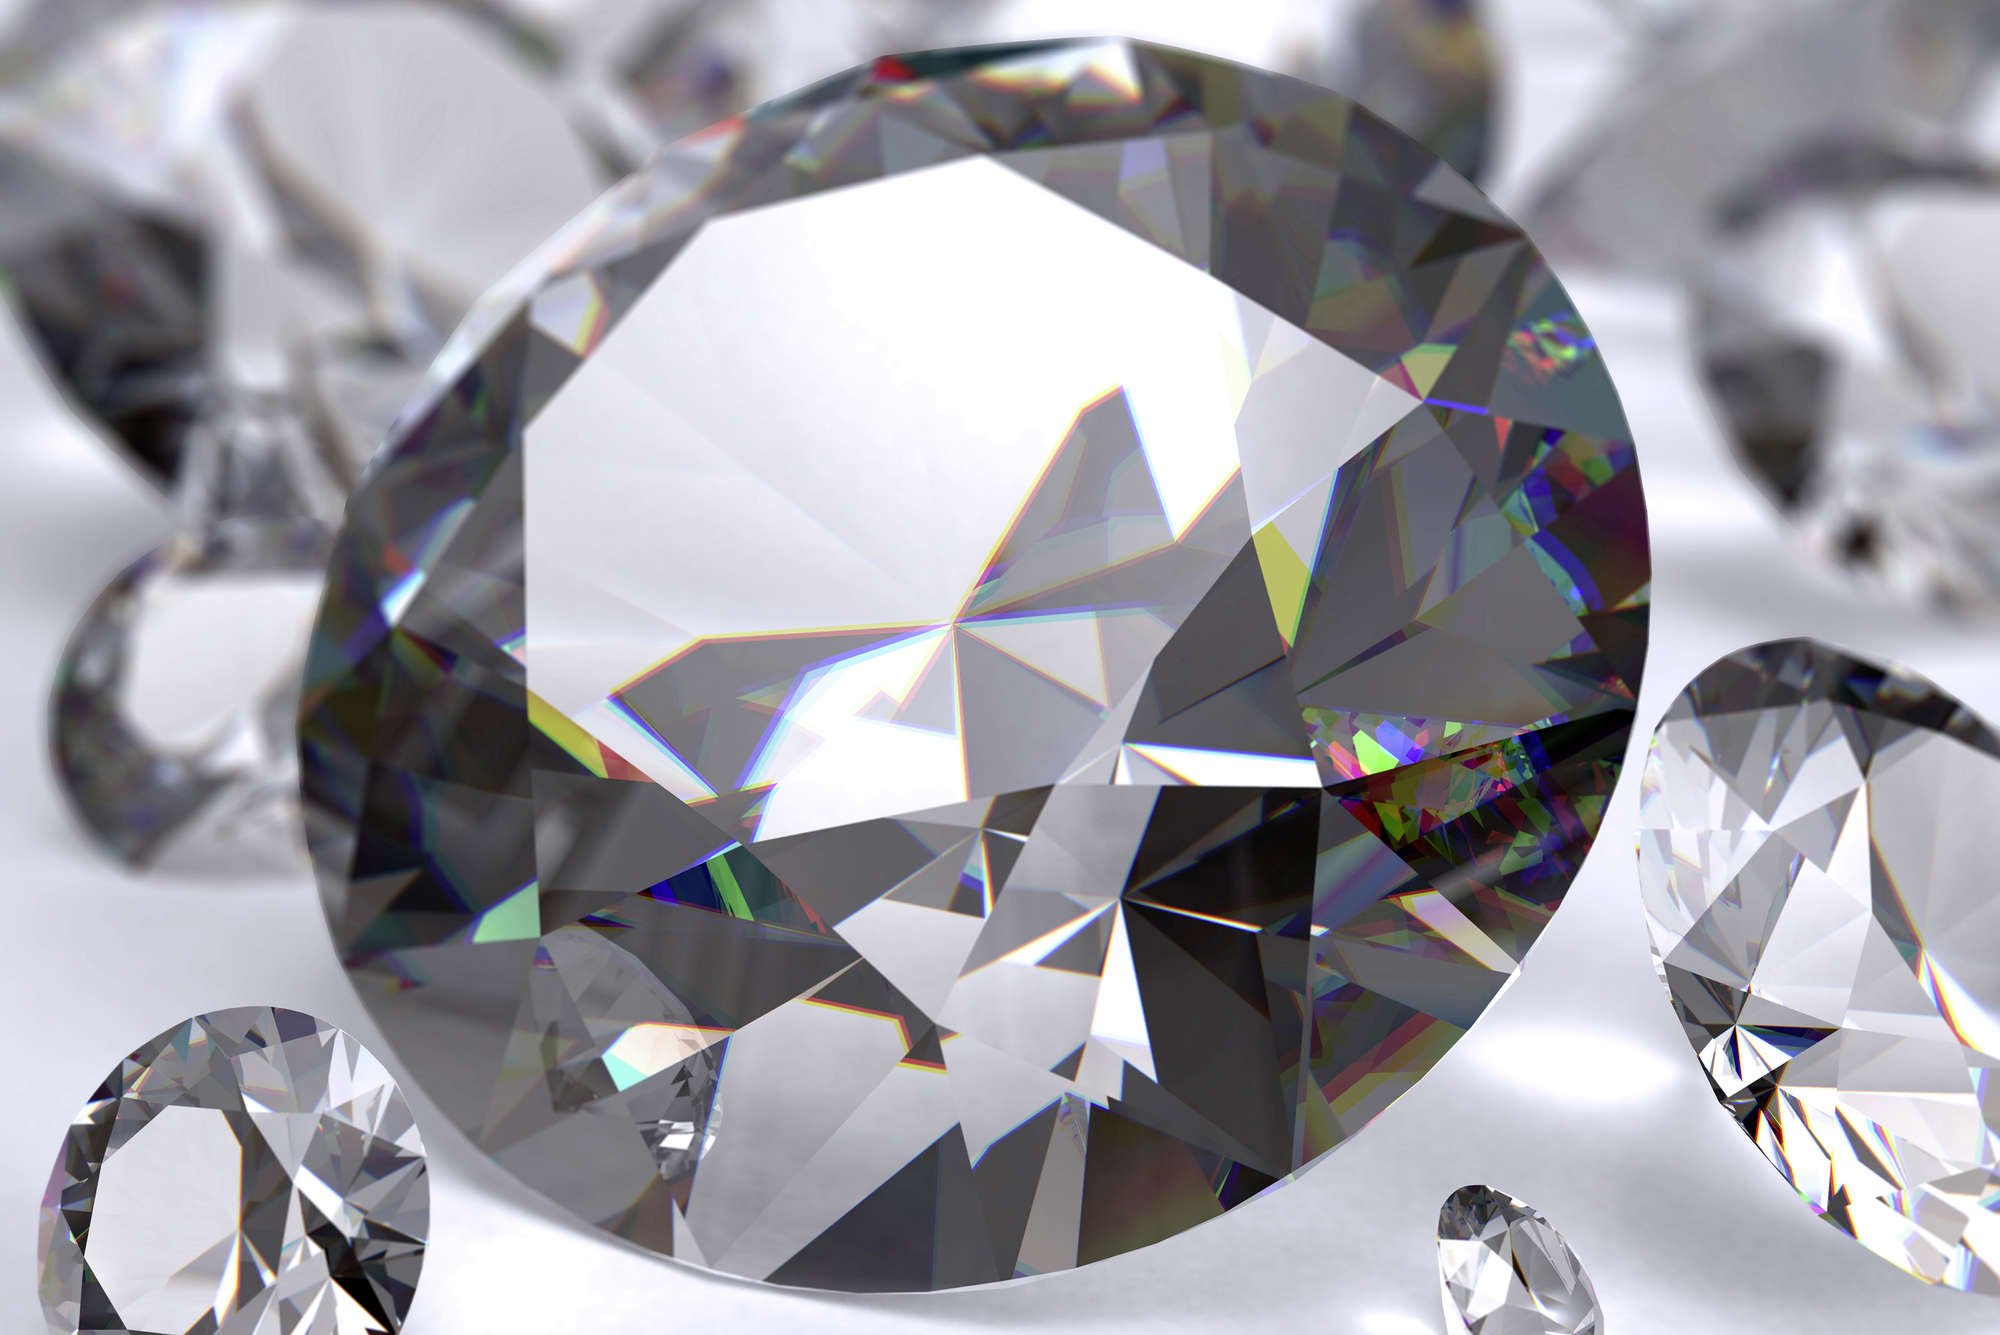             Fototapete großer Diamant – Mattes Glattvlies
        